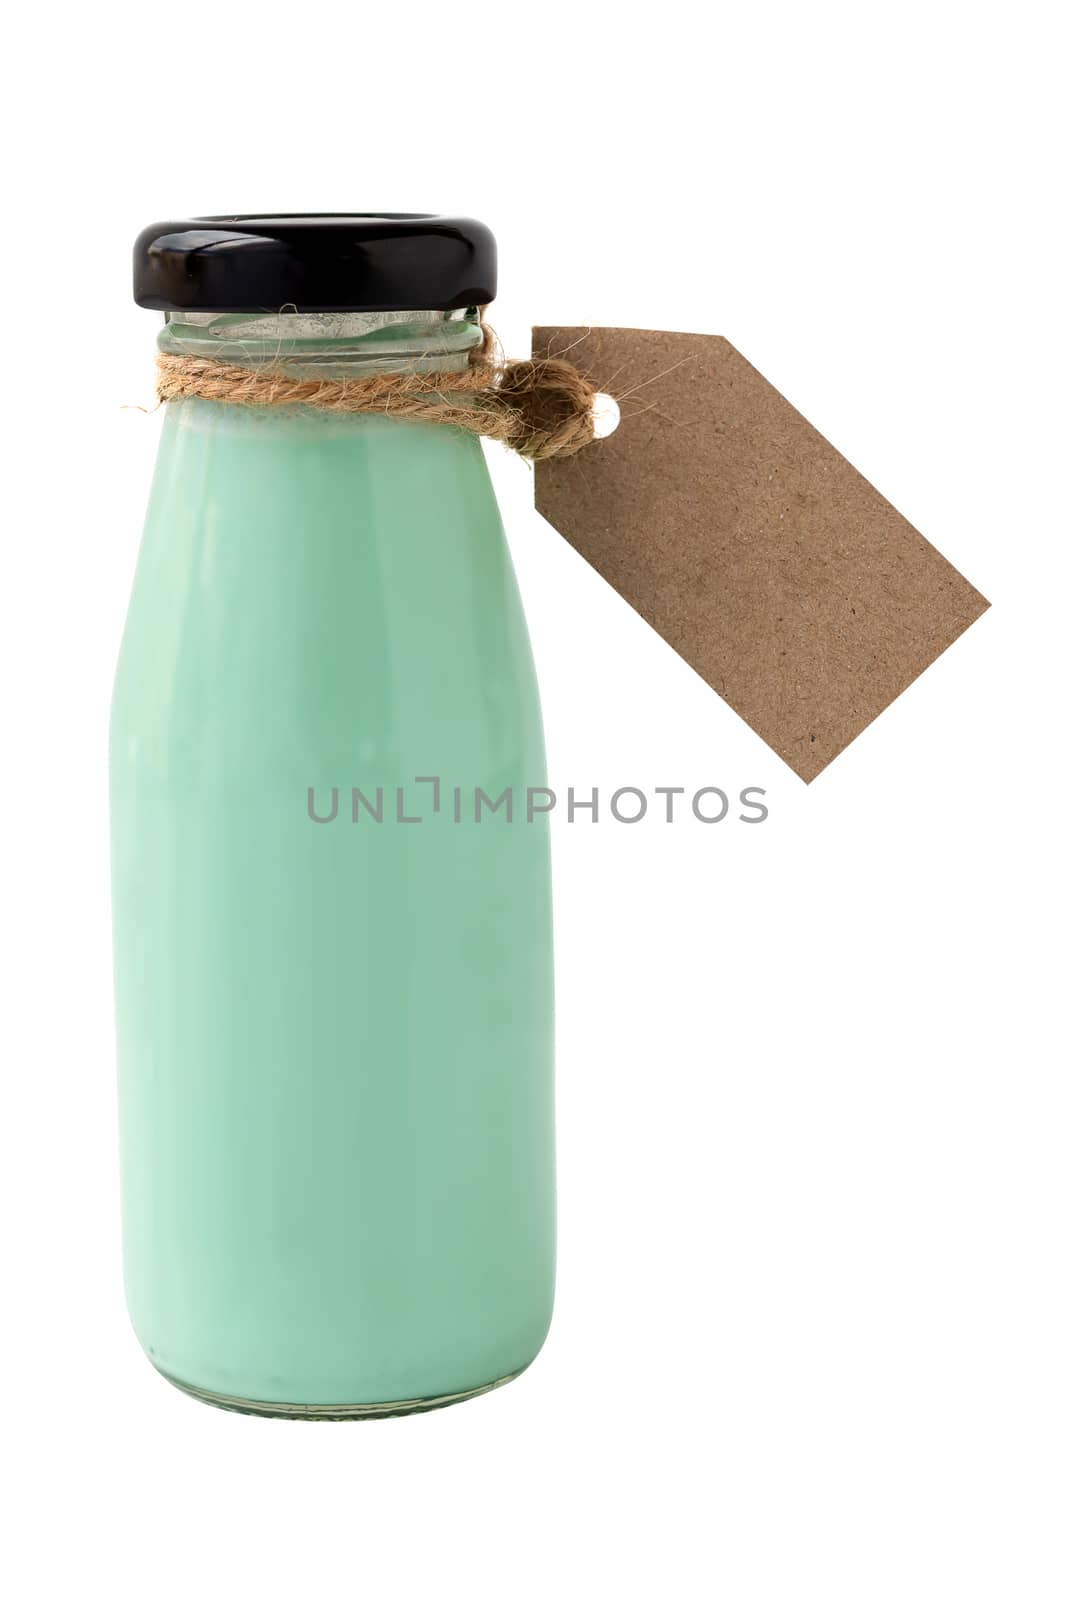 Bottle of Mint milk isolated on white background.